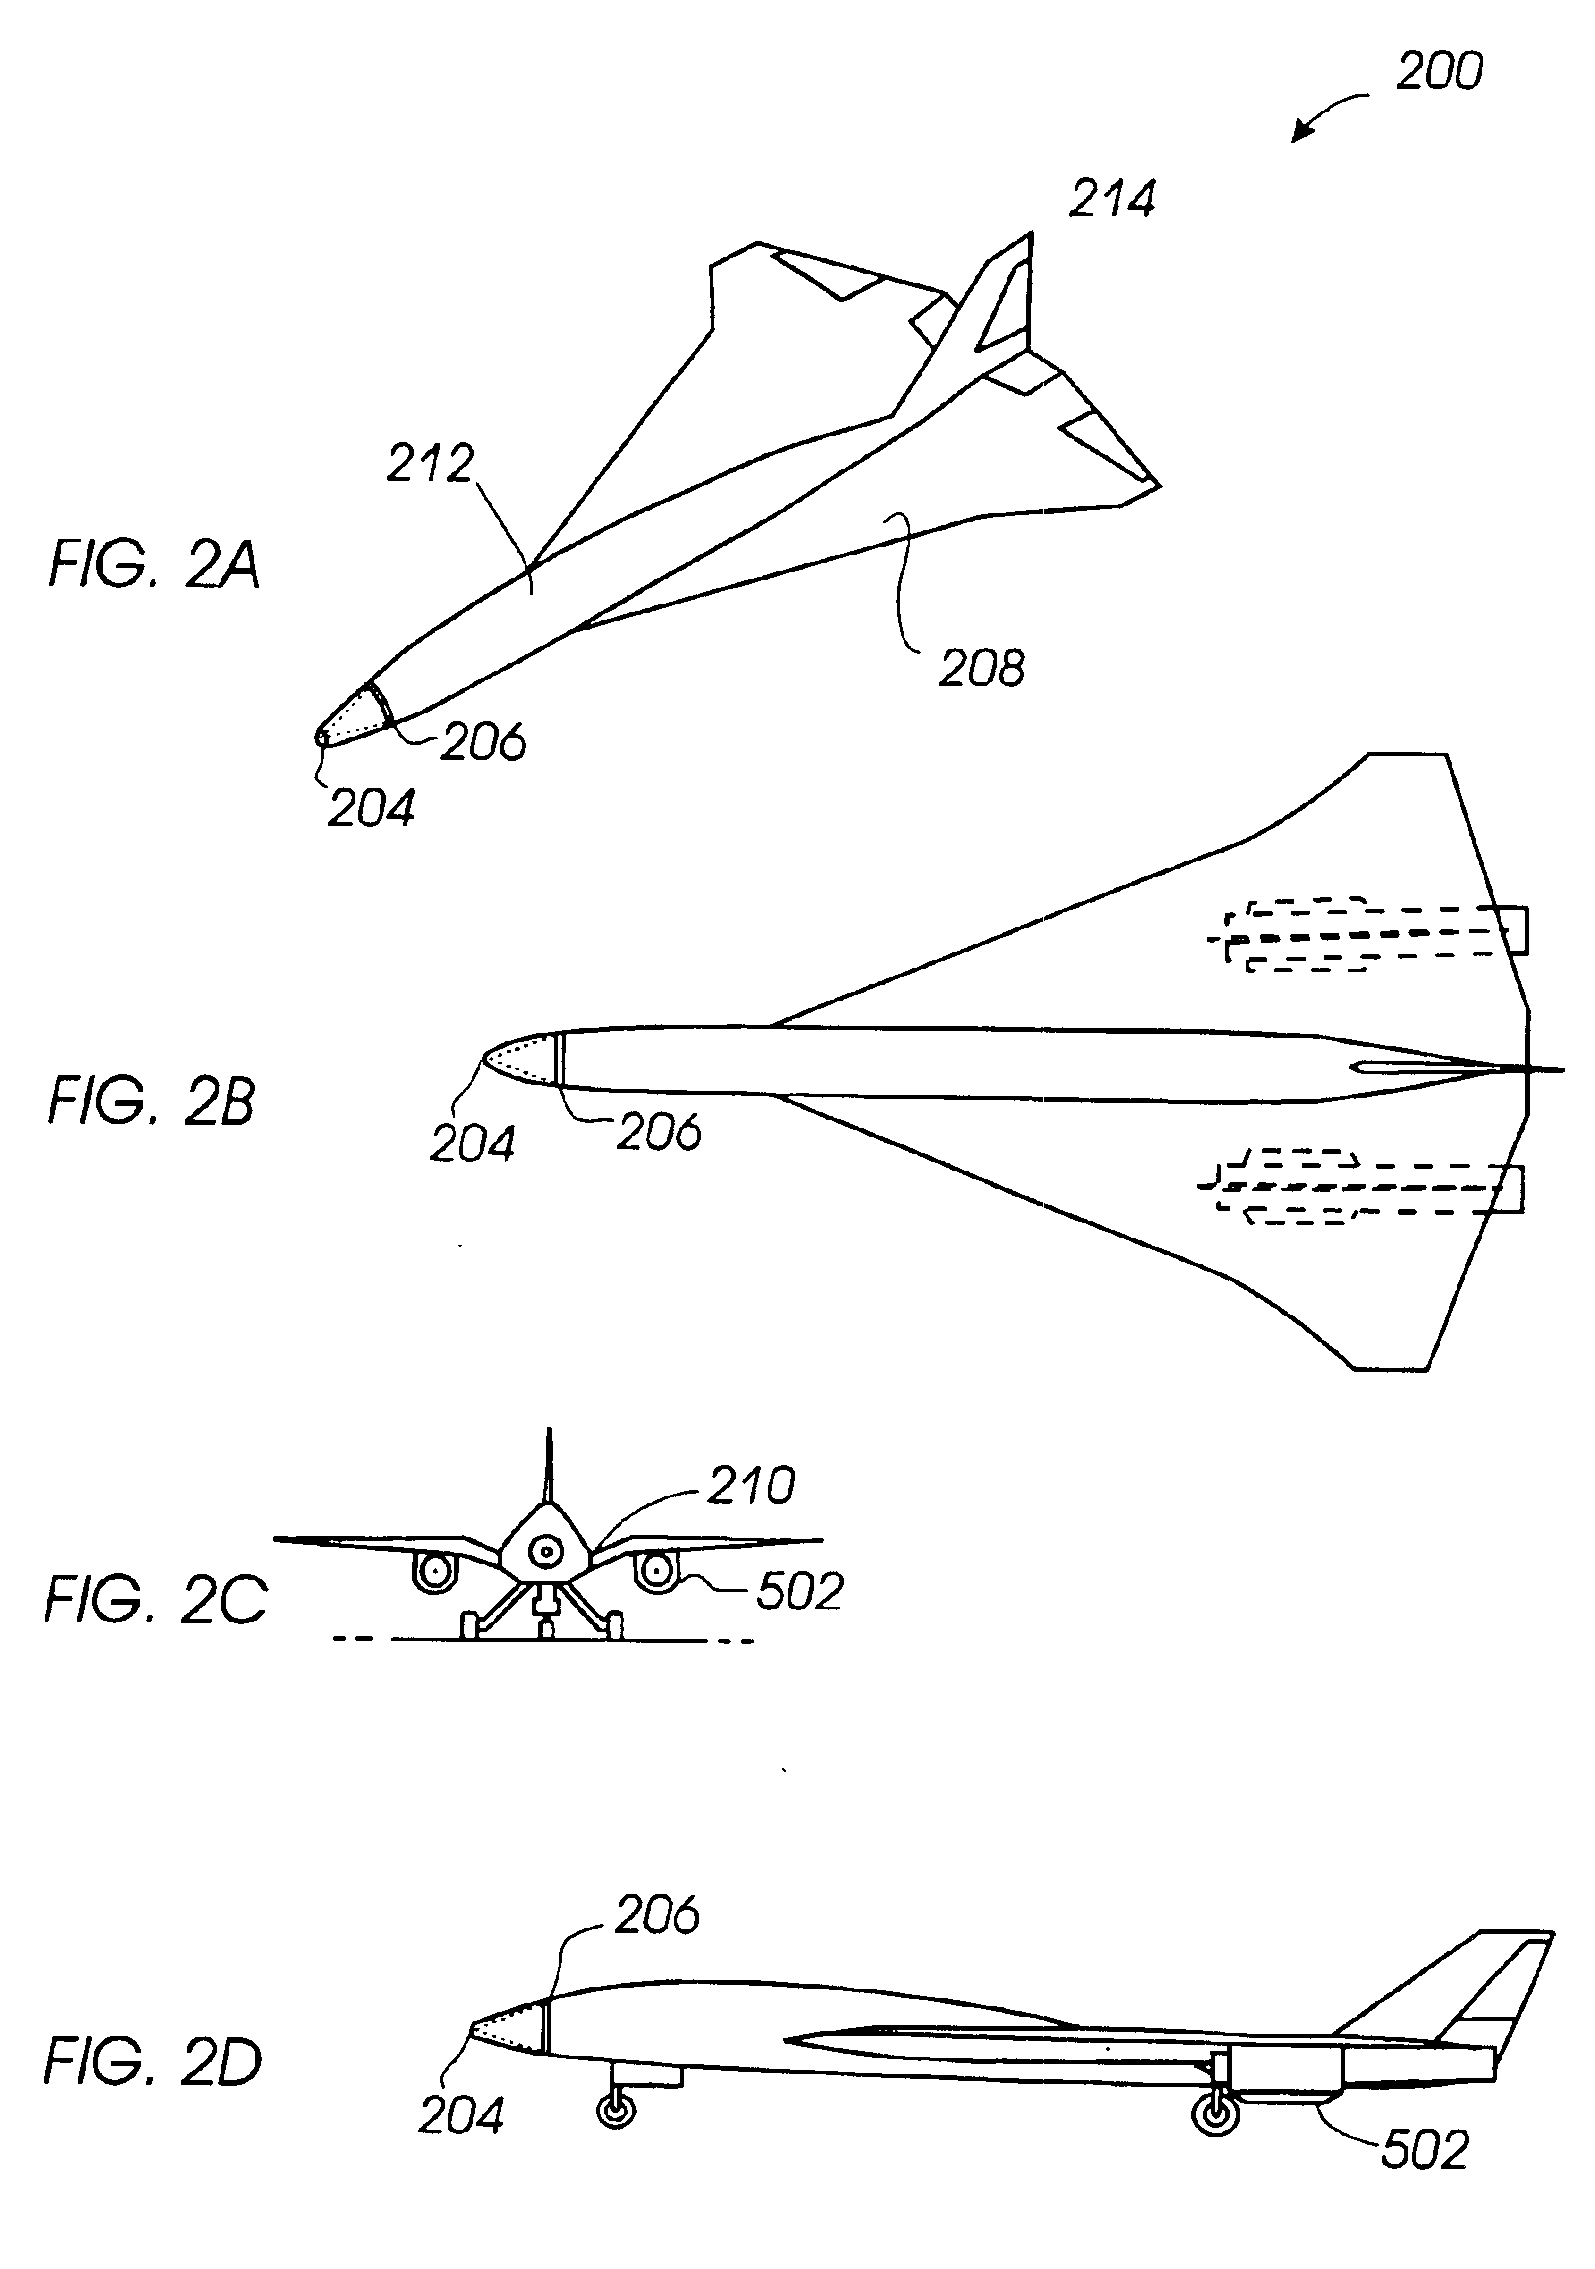 Passive aerodynamic sonic boom suppression for supersonic aircraft